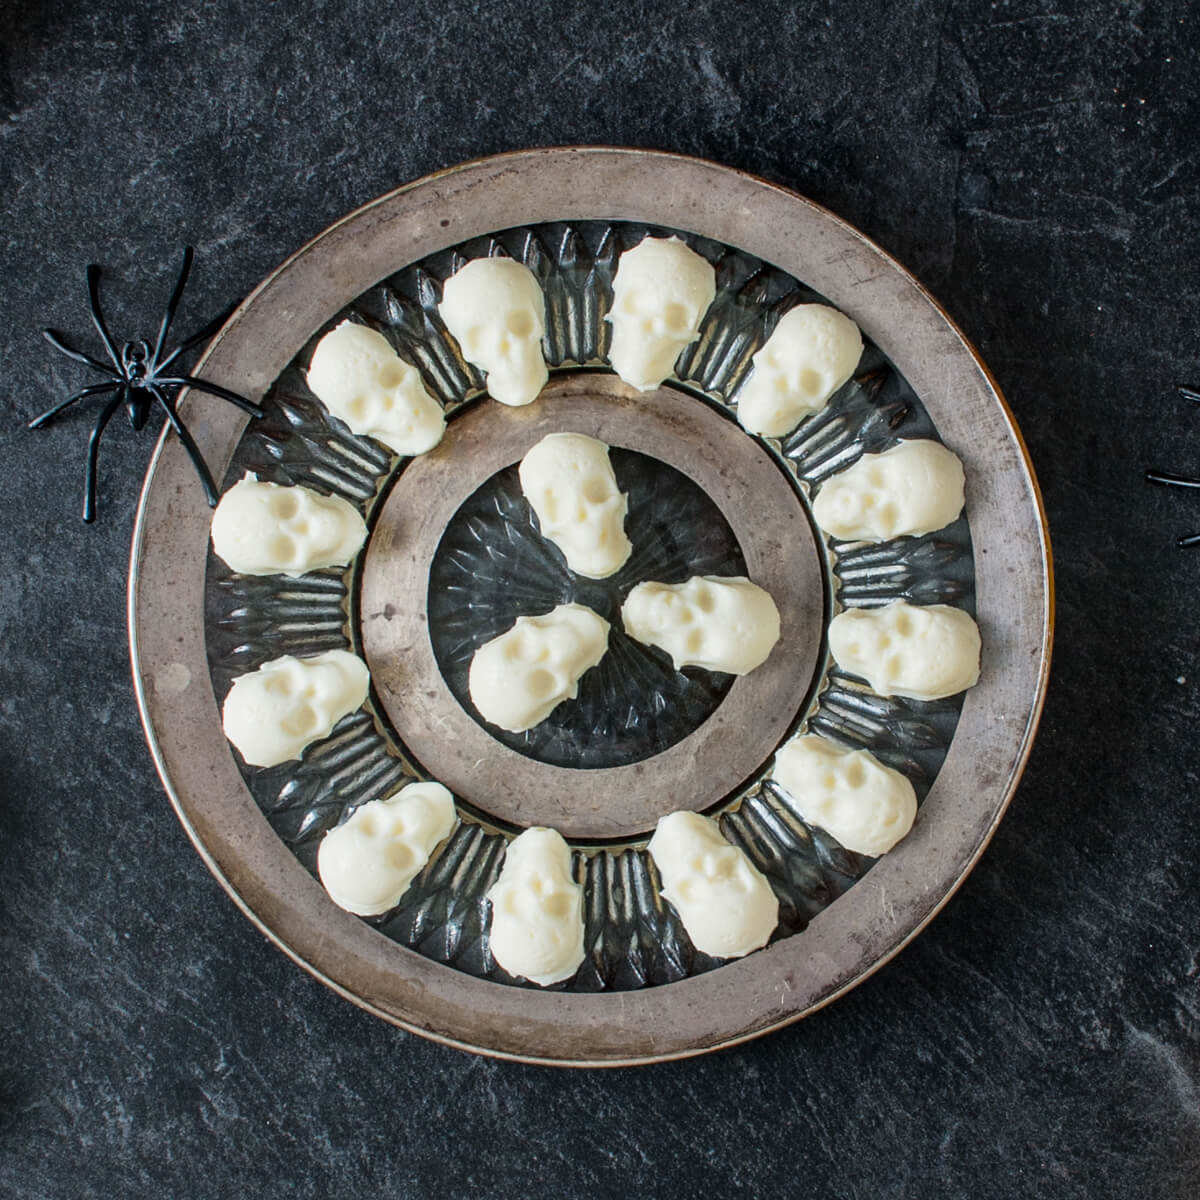 A round silver platter of mozzarella shaped into little skulls.
